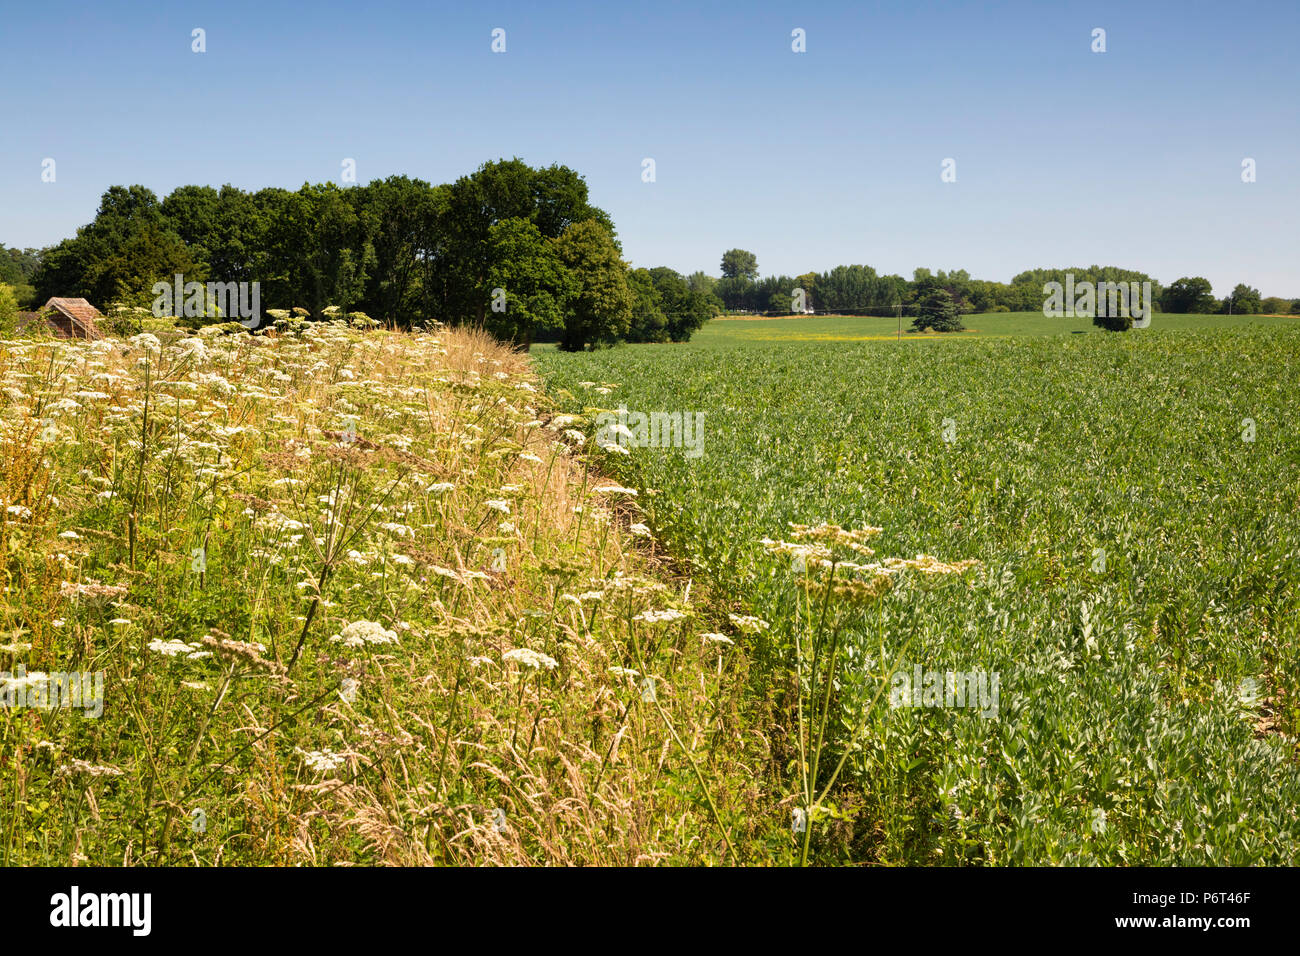 Crop field with wild flower margin to encourage natural flora and fauna, near Newbury, West Berkshire, England, United Kingdom, Europe Stock Photo